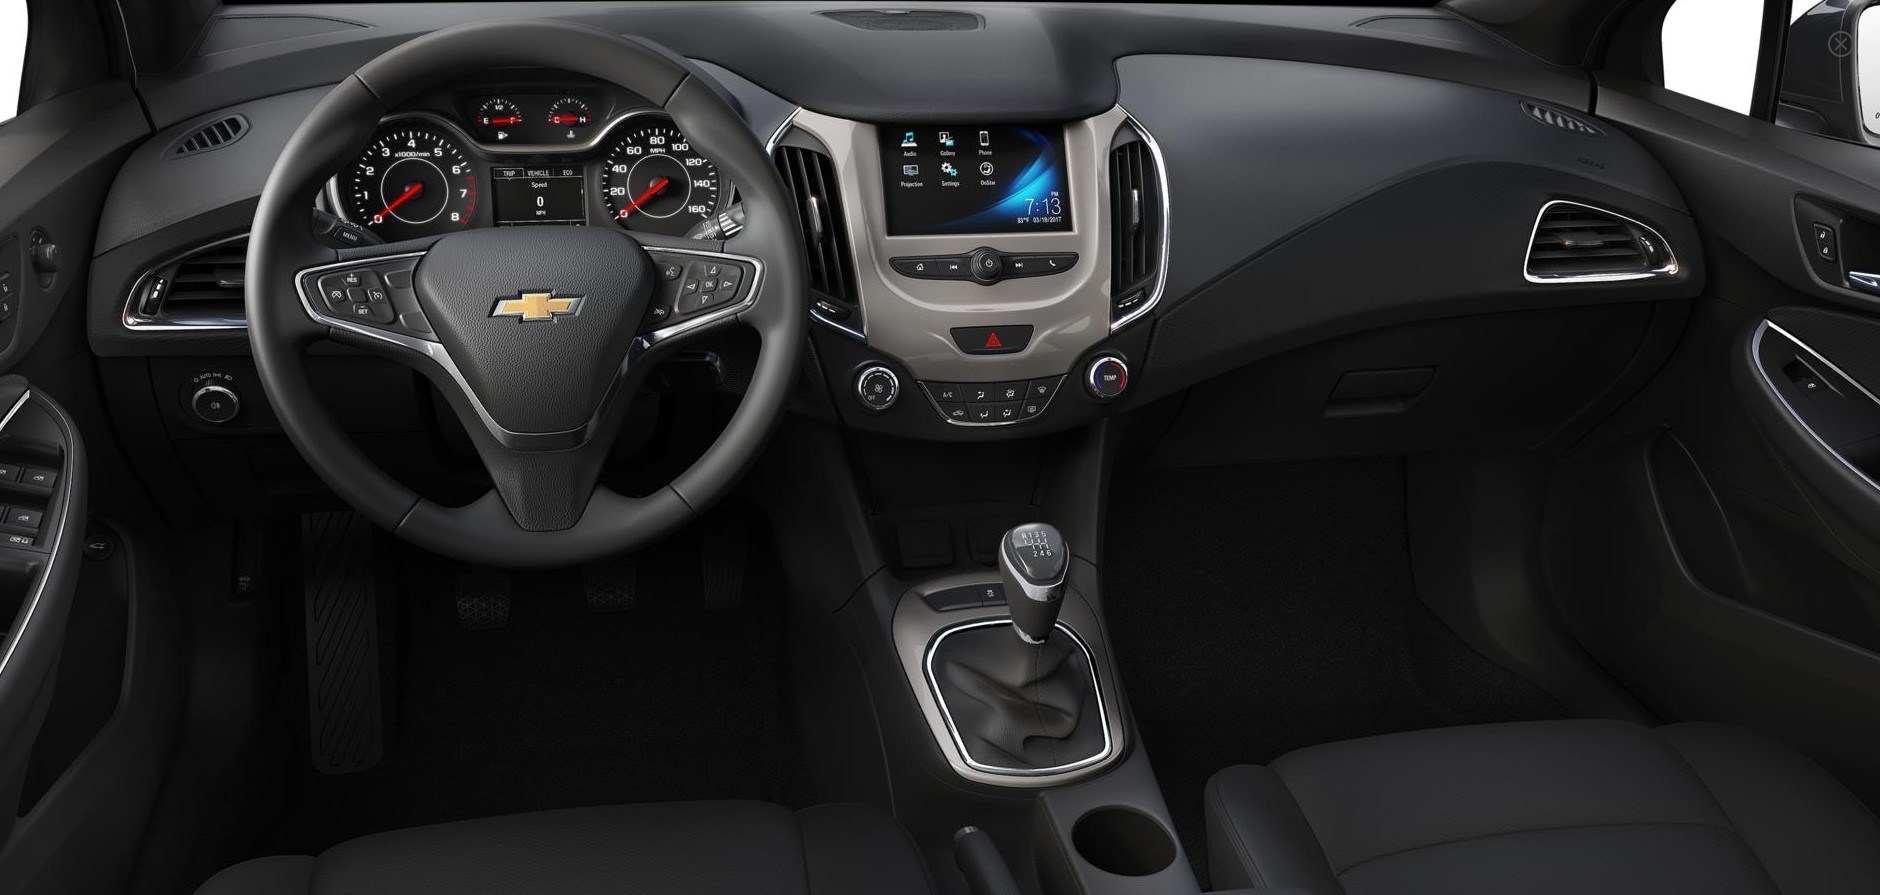 2018 Chevrolet Cruze Black Leather Interior